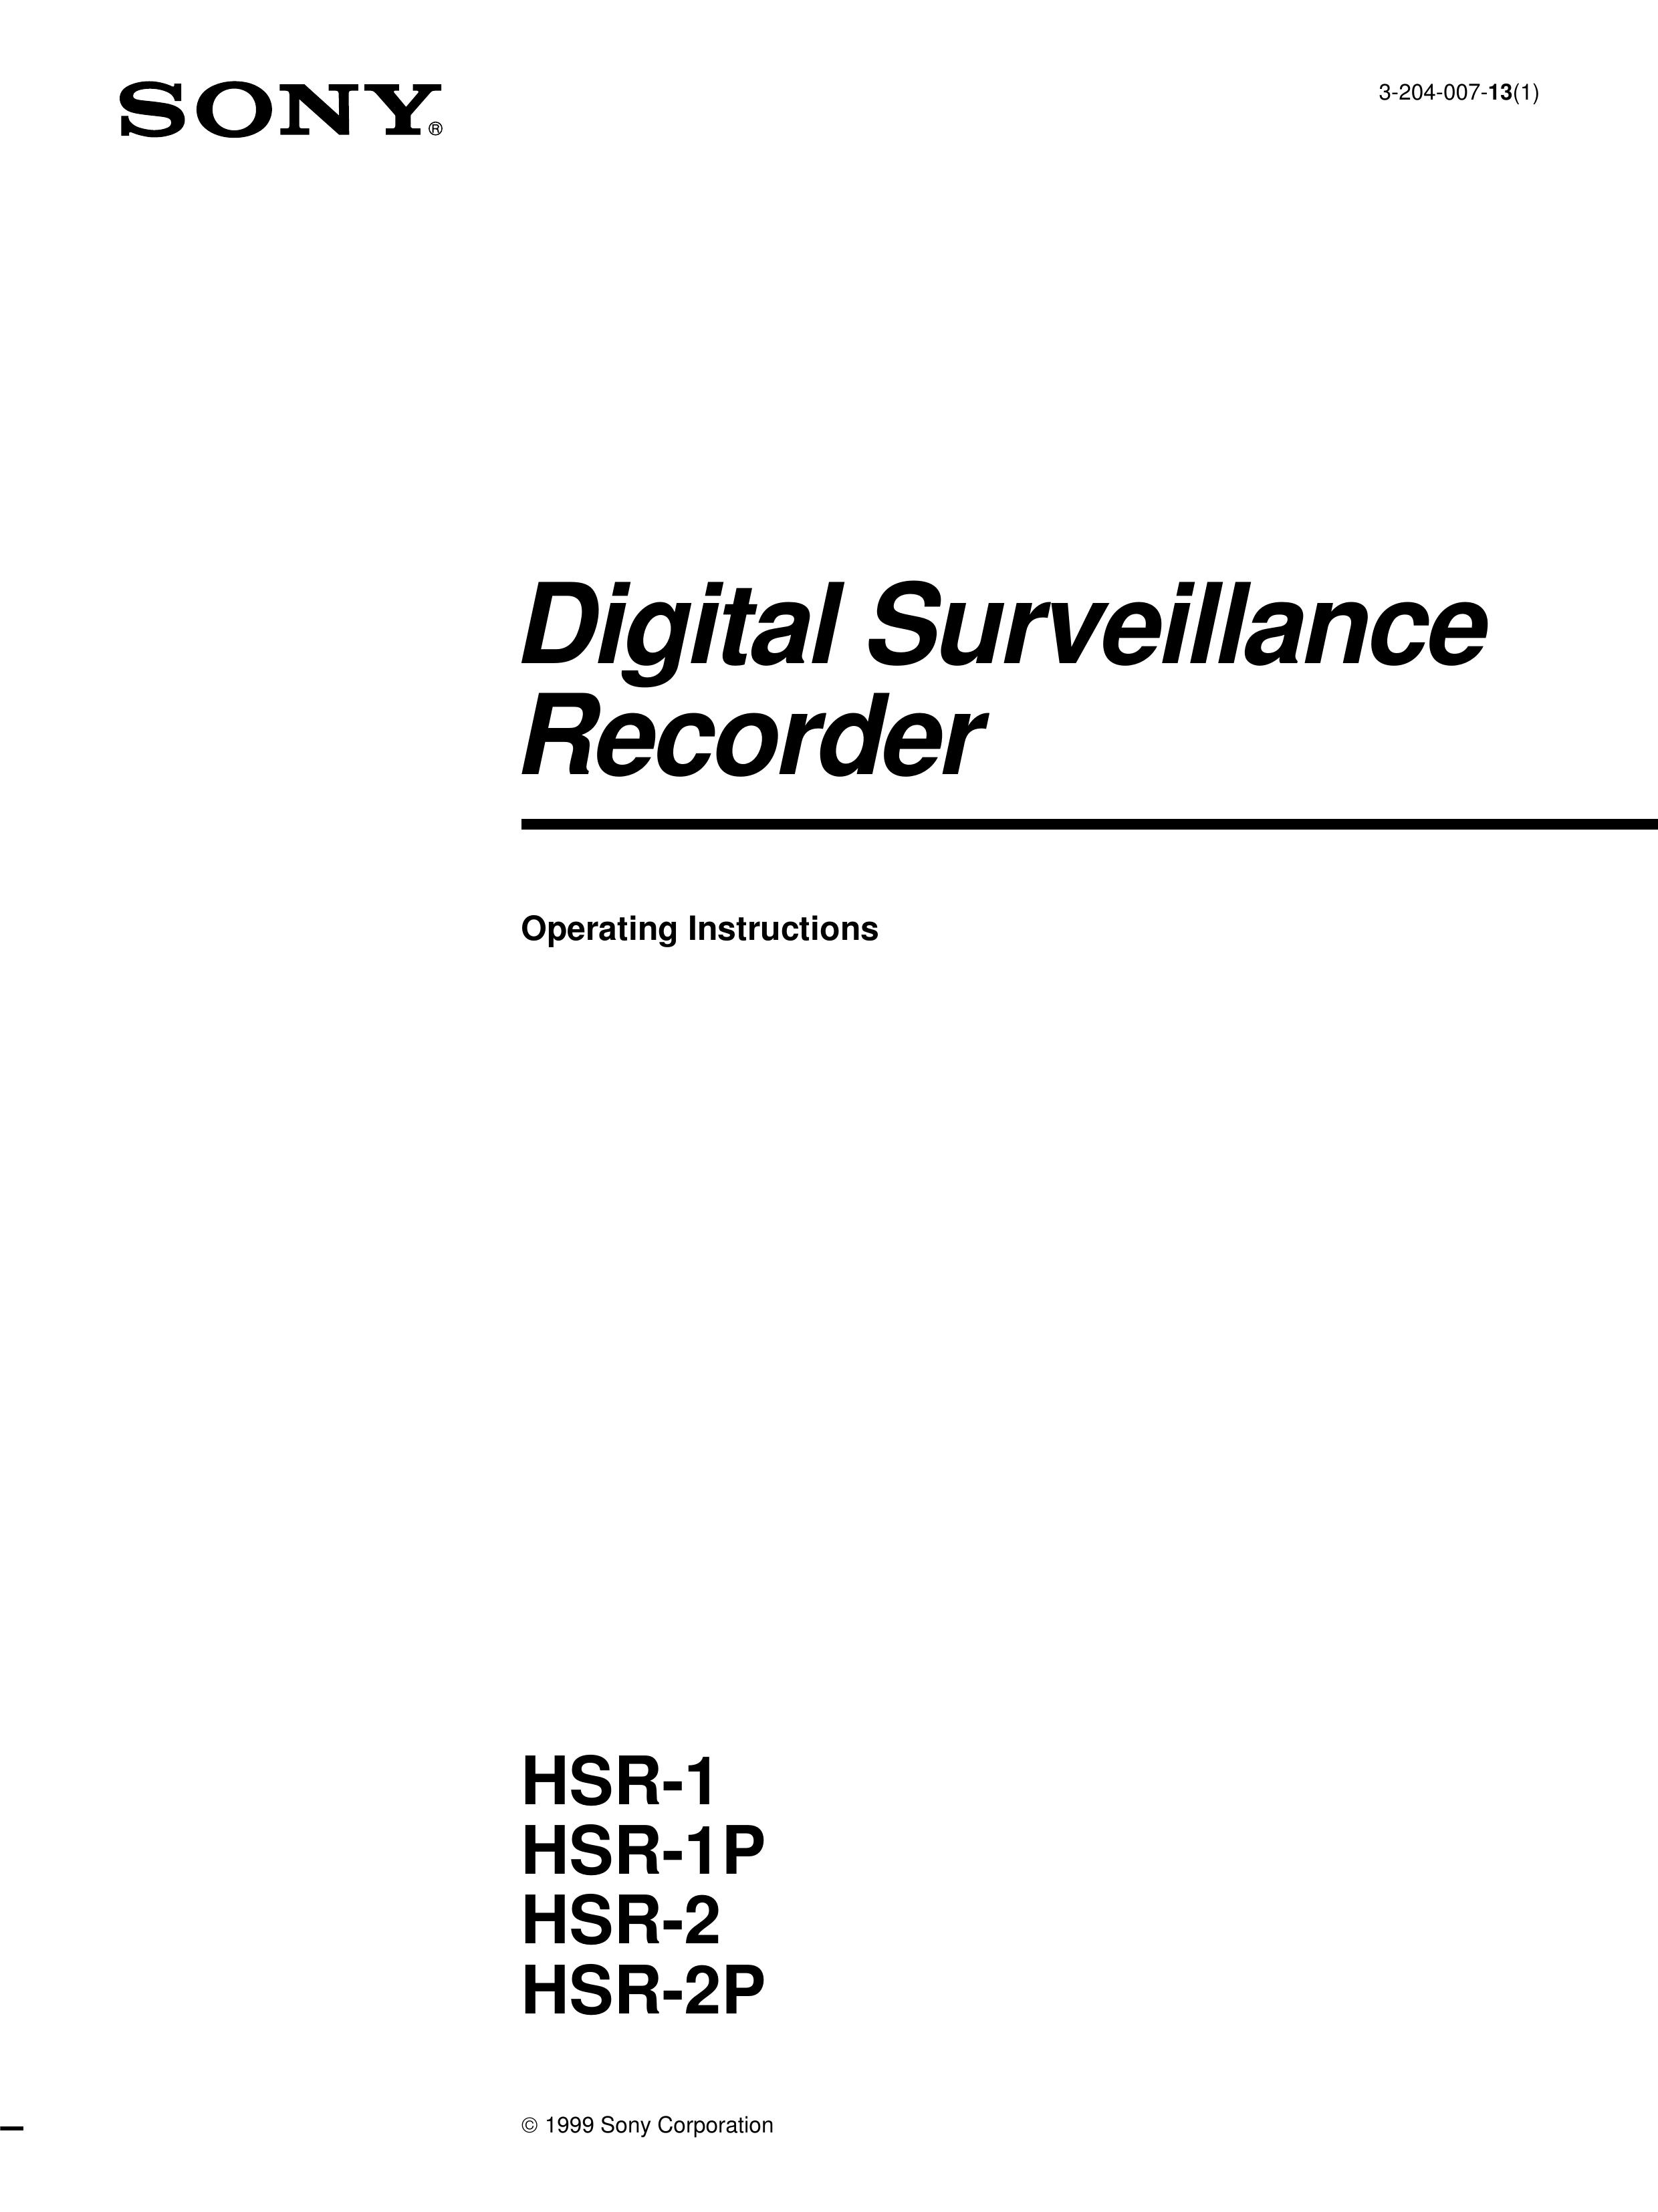 Sony HSR-2P Security Camera User Manual